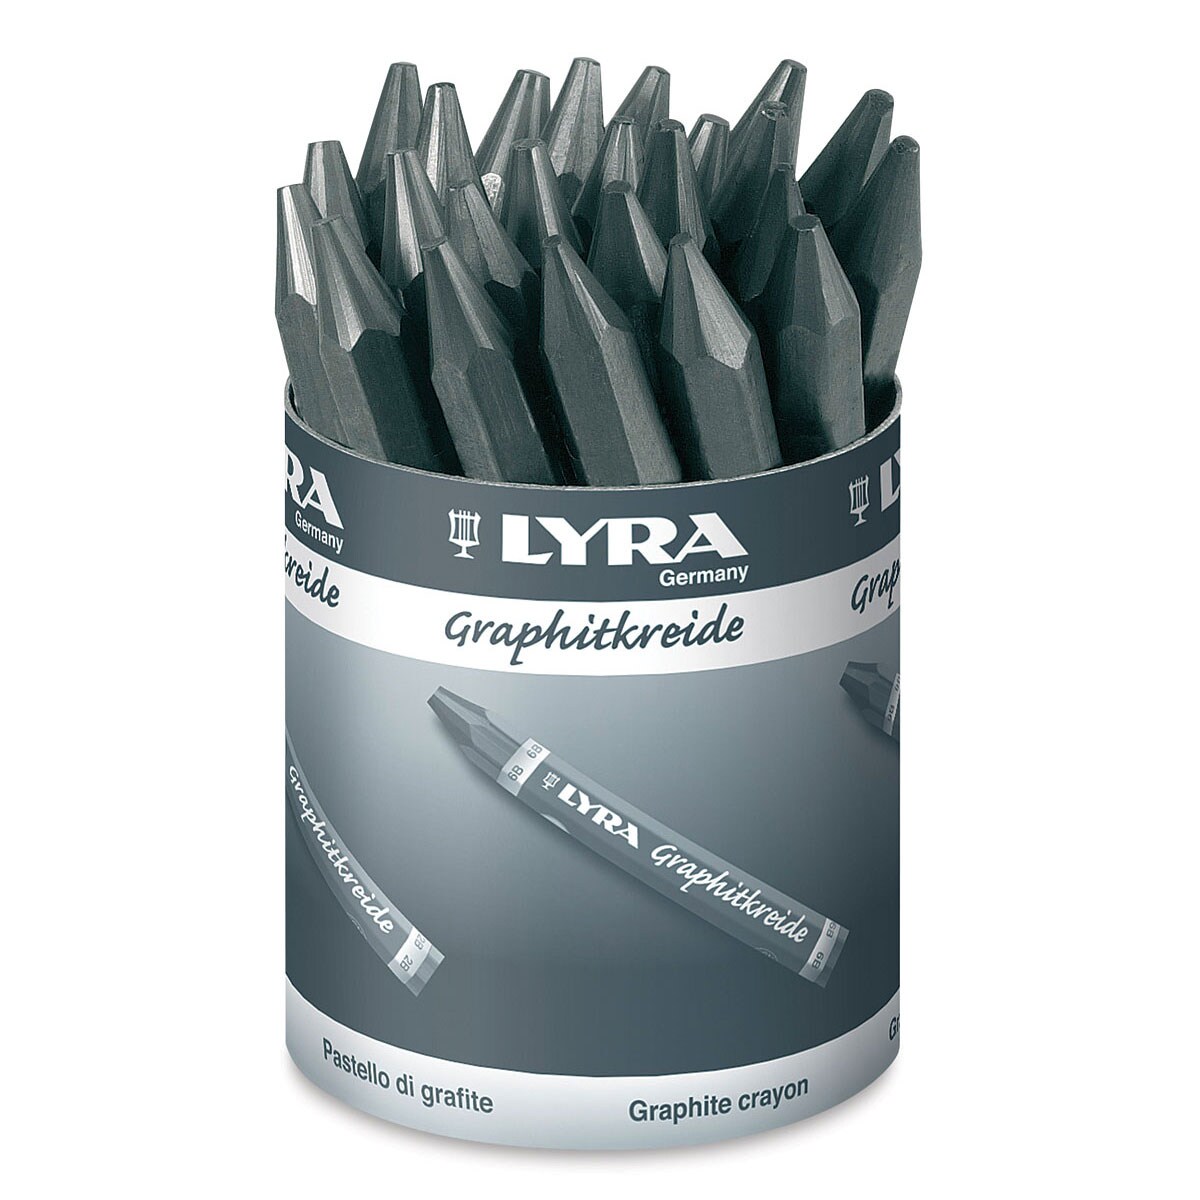 Lyra Graphite Crayon - Classroom Pack, Set of 24